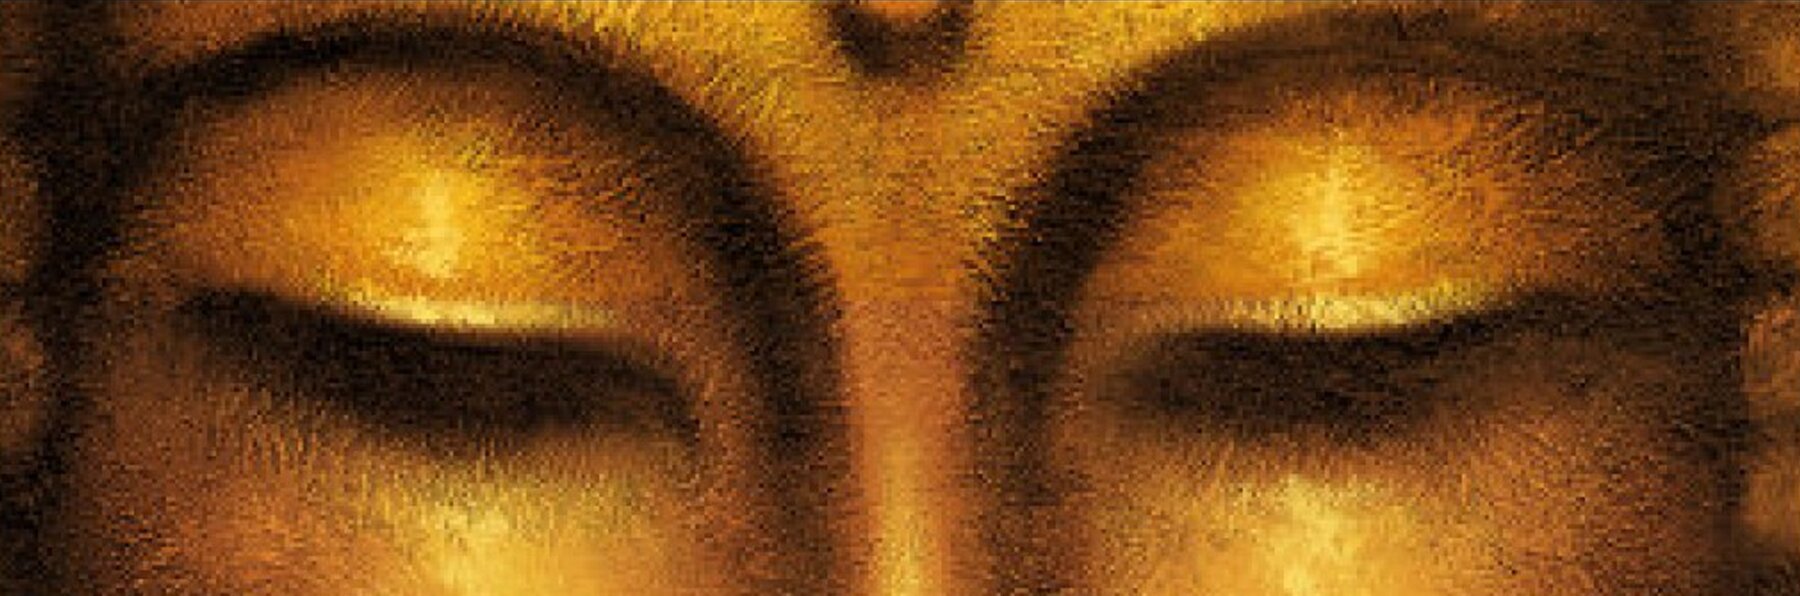 meditazione buddhista